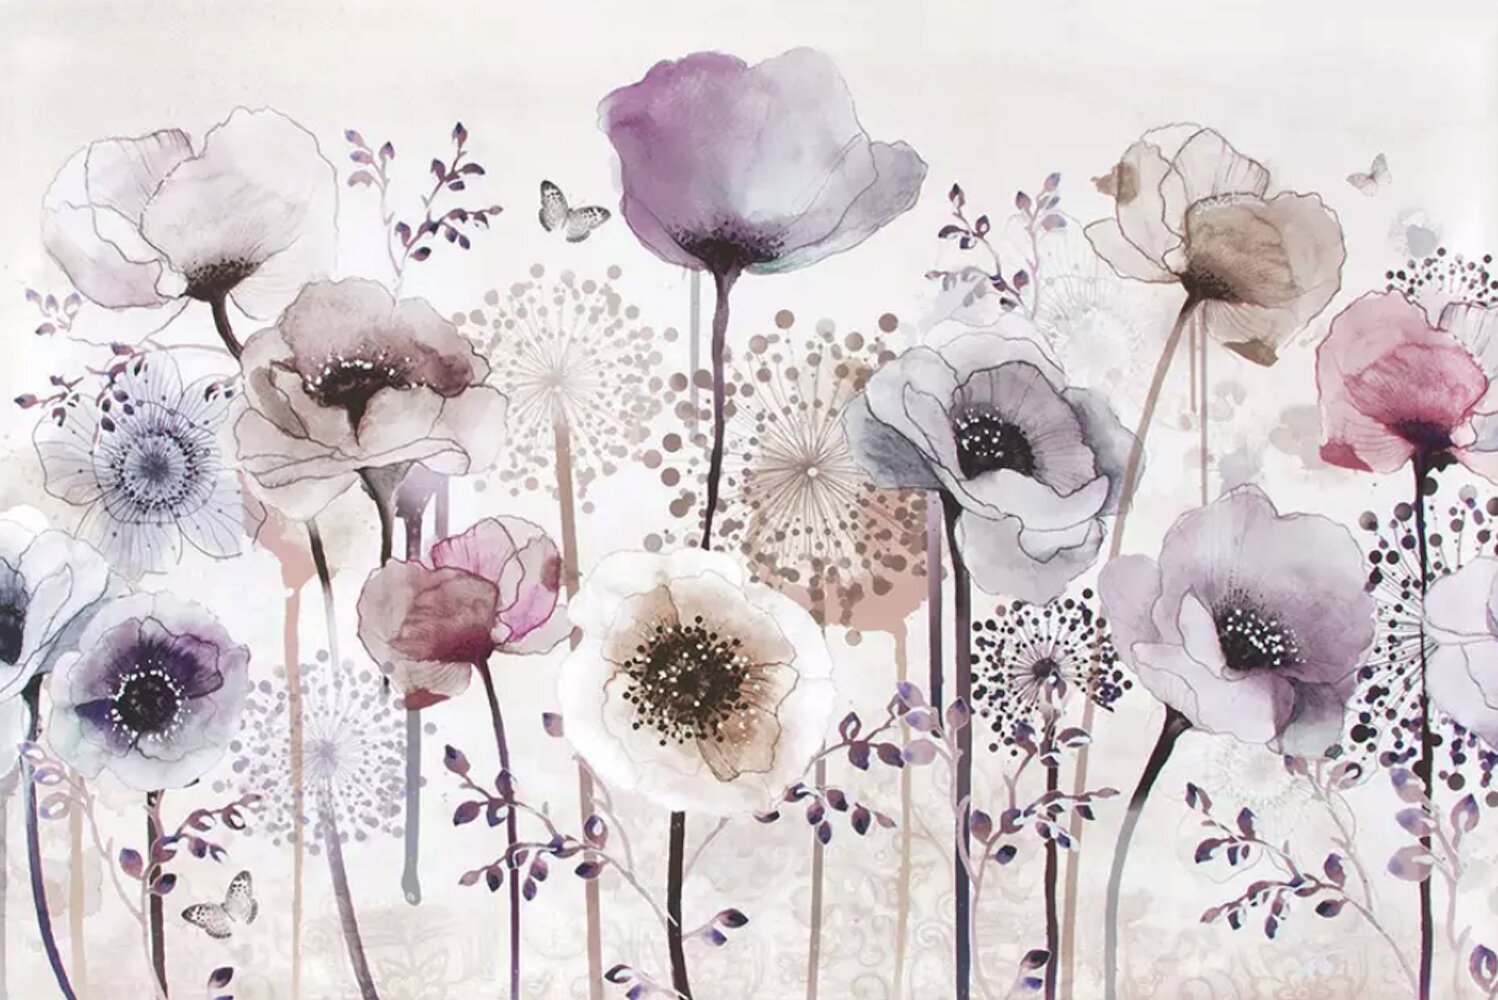 Flower Wallpapers: Free HD Download [500+ HQ] | Unsplash